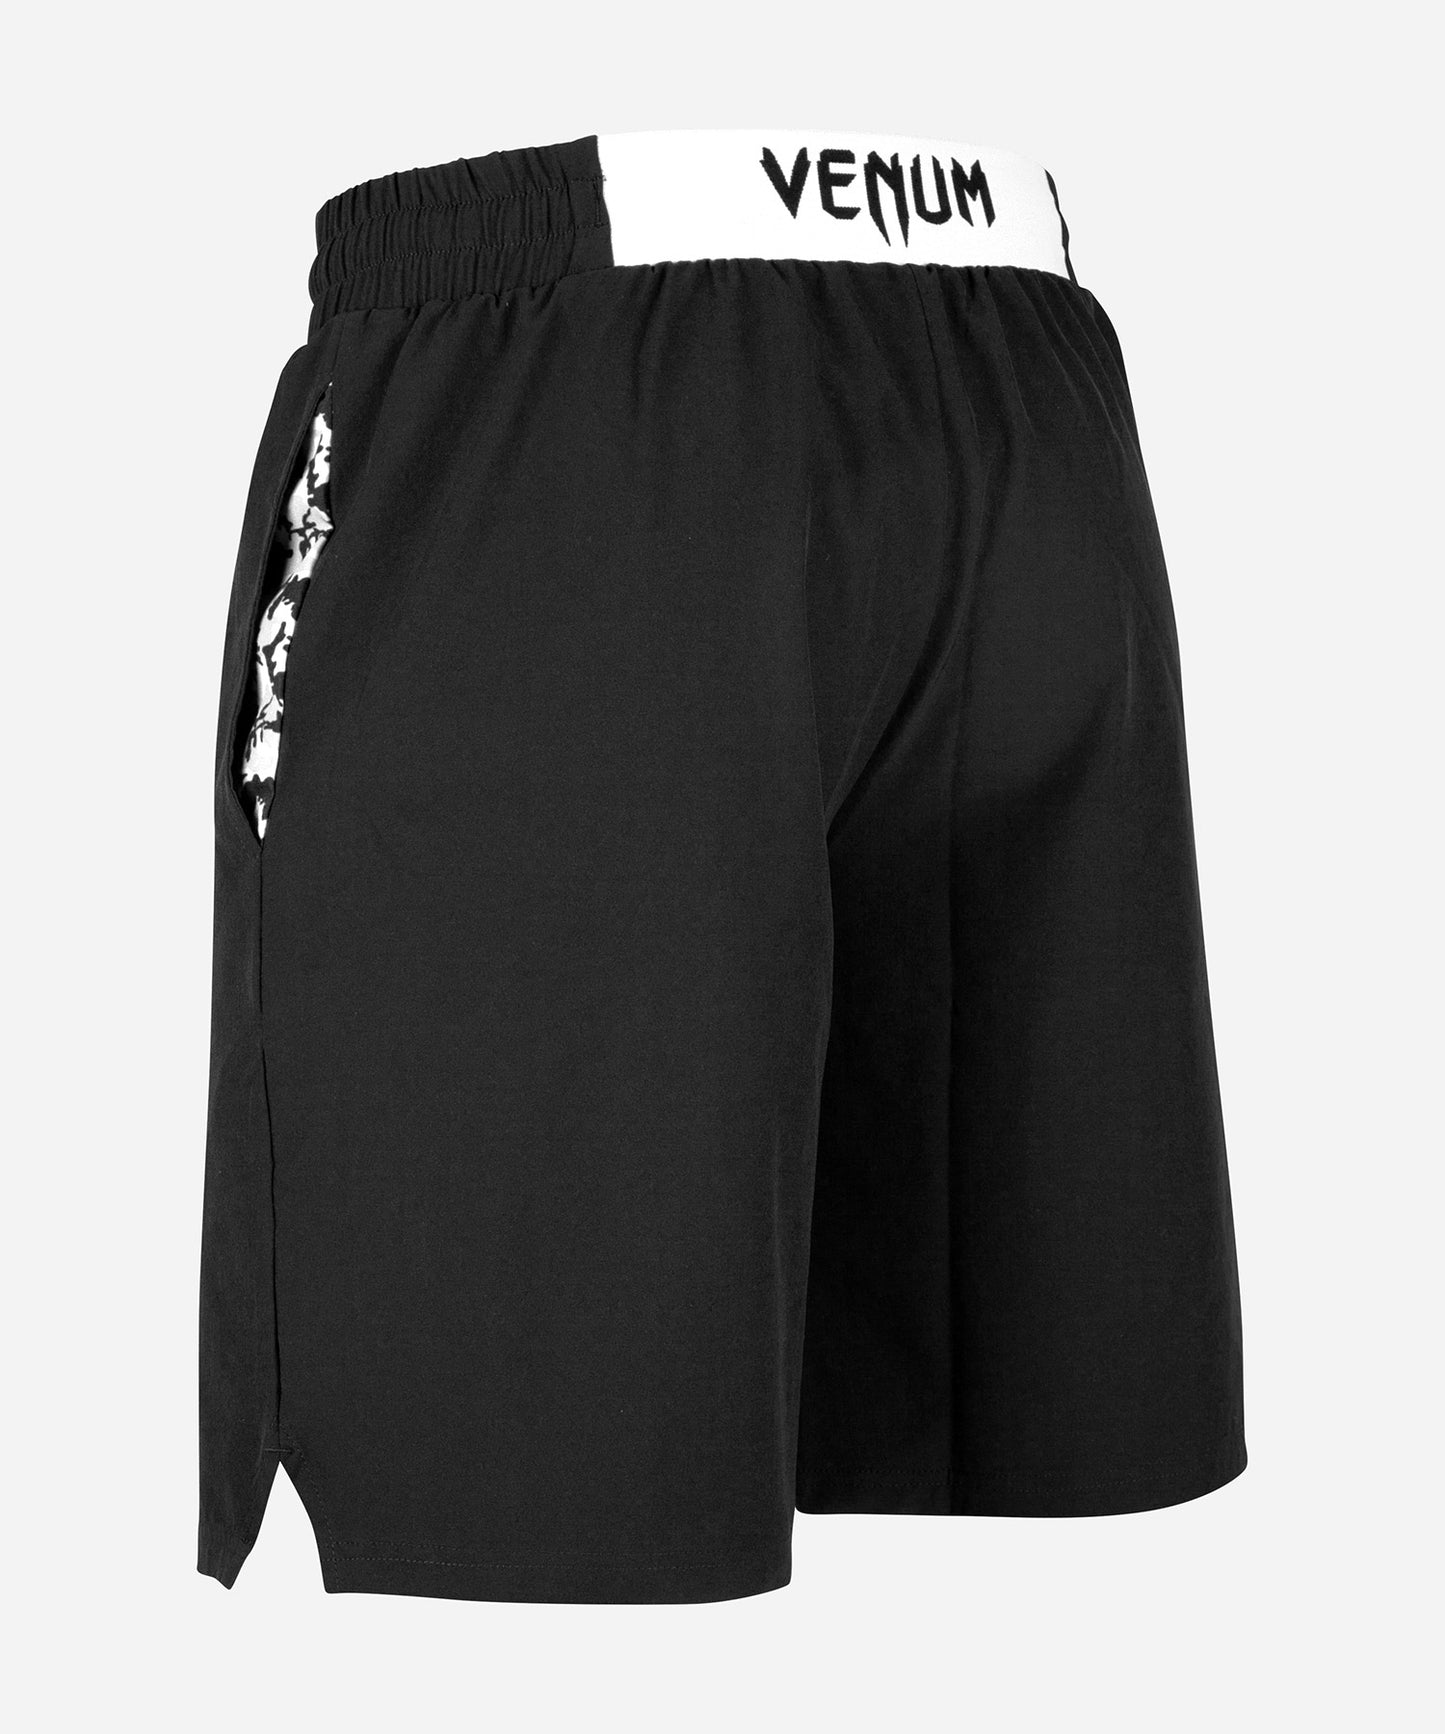 Venum Classic Training Shorts - Black/White